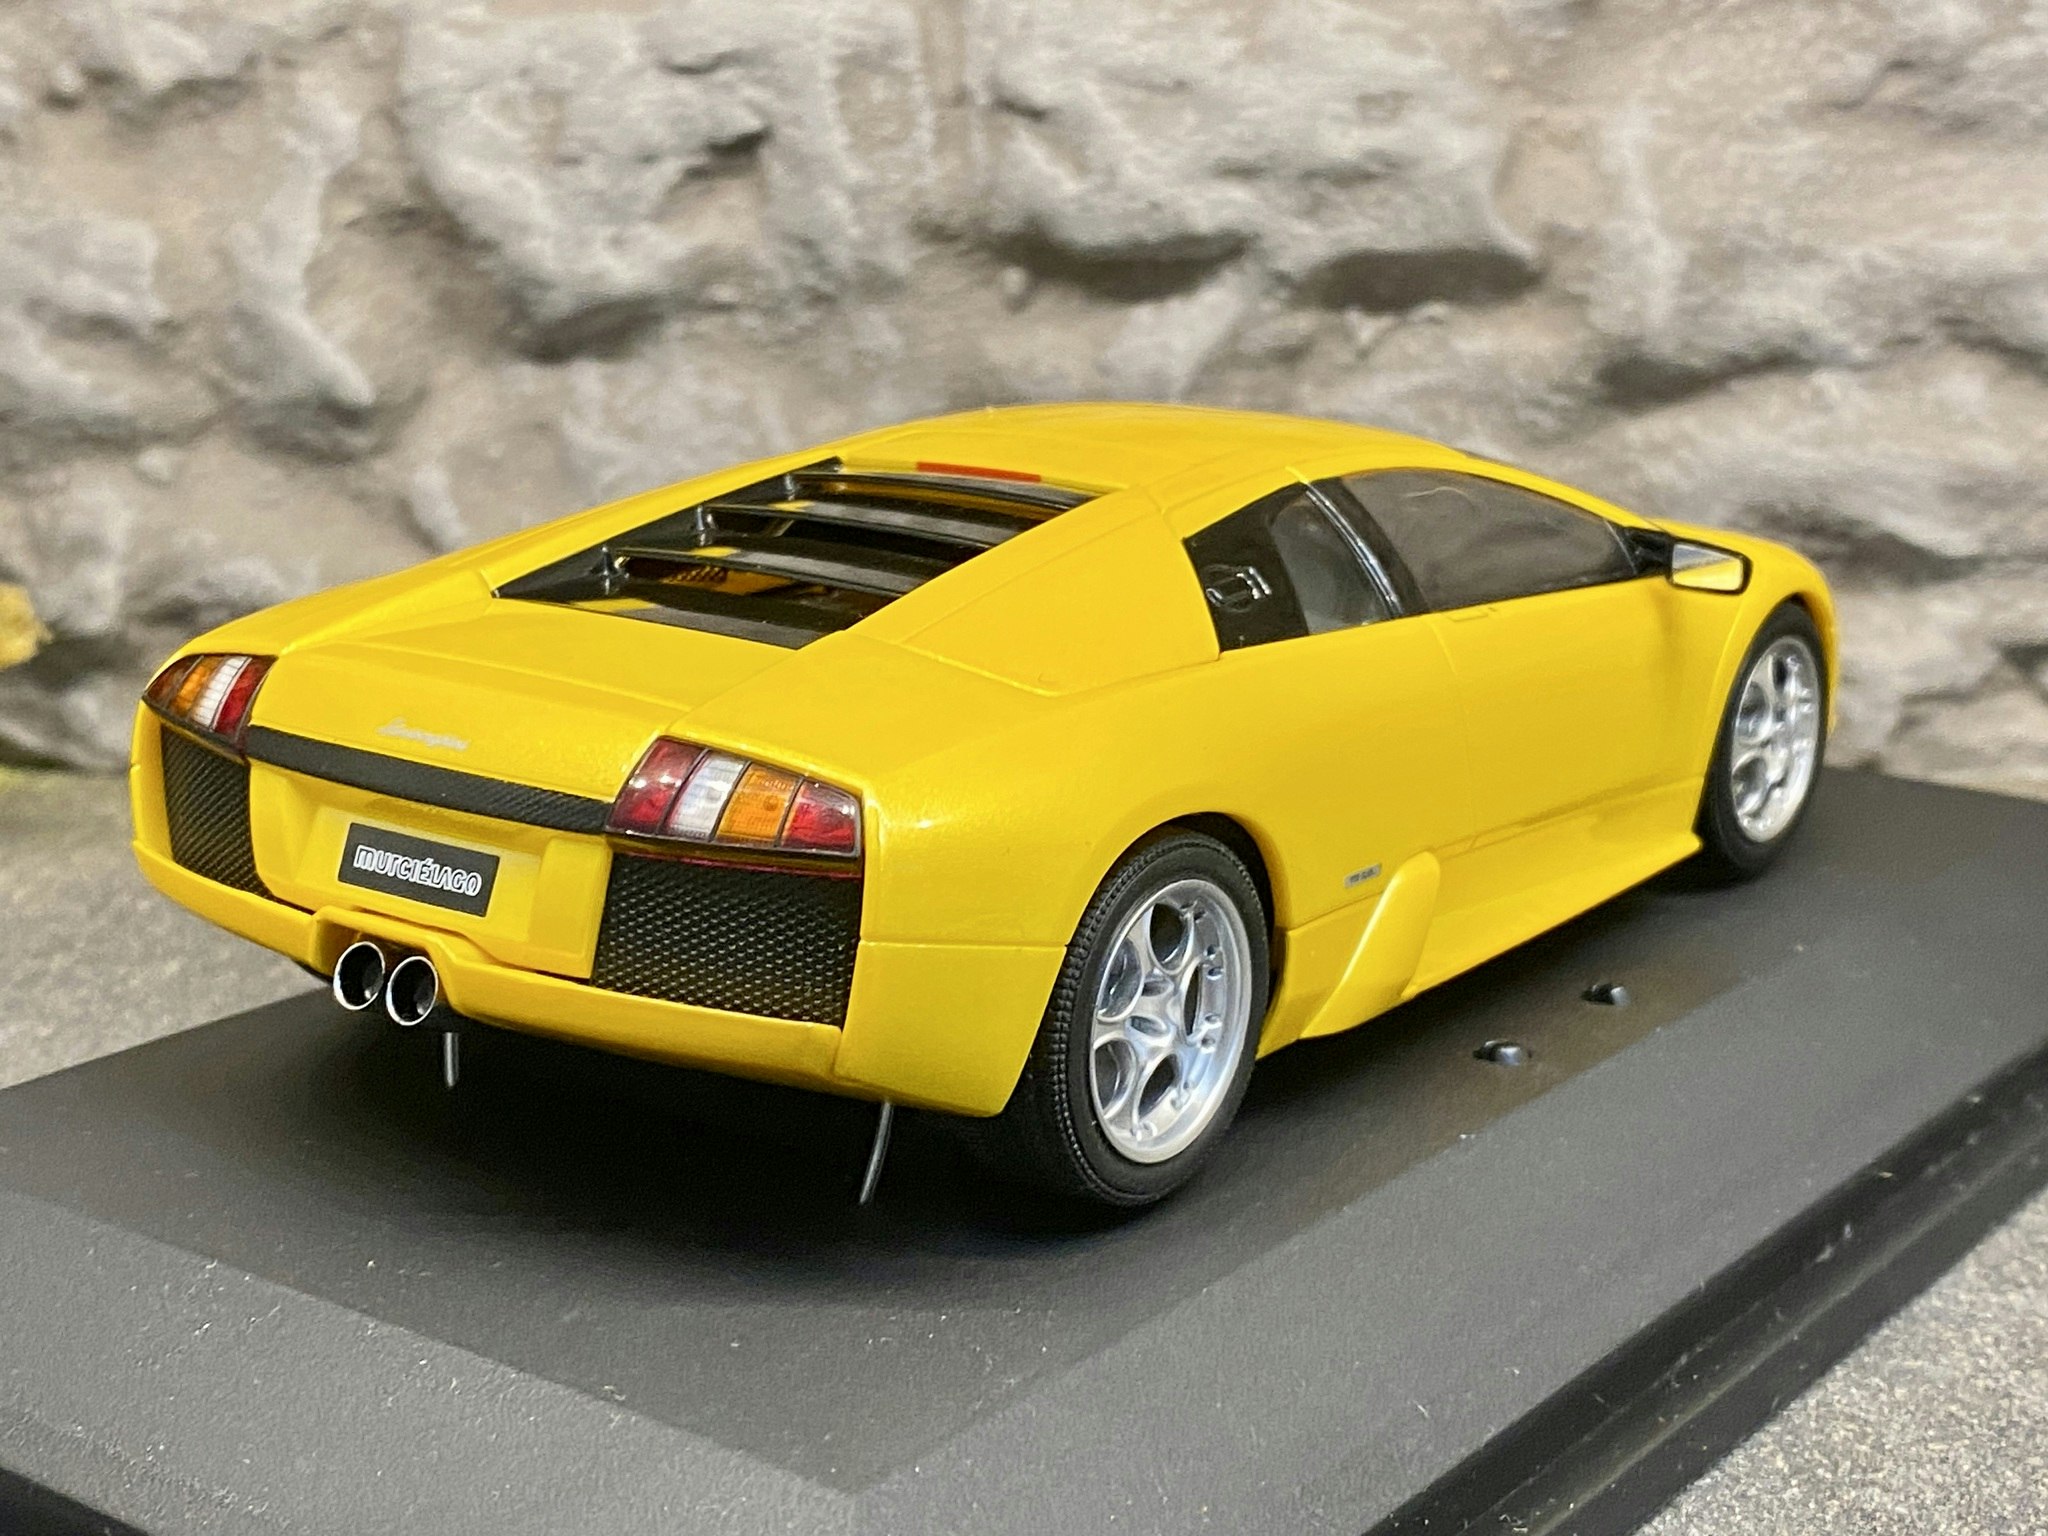 Skala 1/24 Analog Slotcar - Lamborghini Murciélago, yellow fr AUTOart Slot Racing